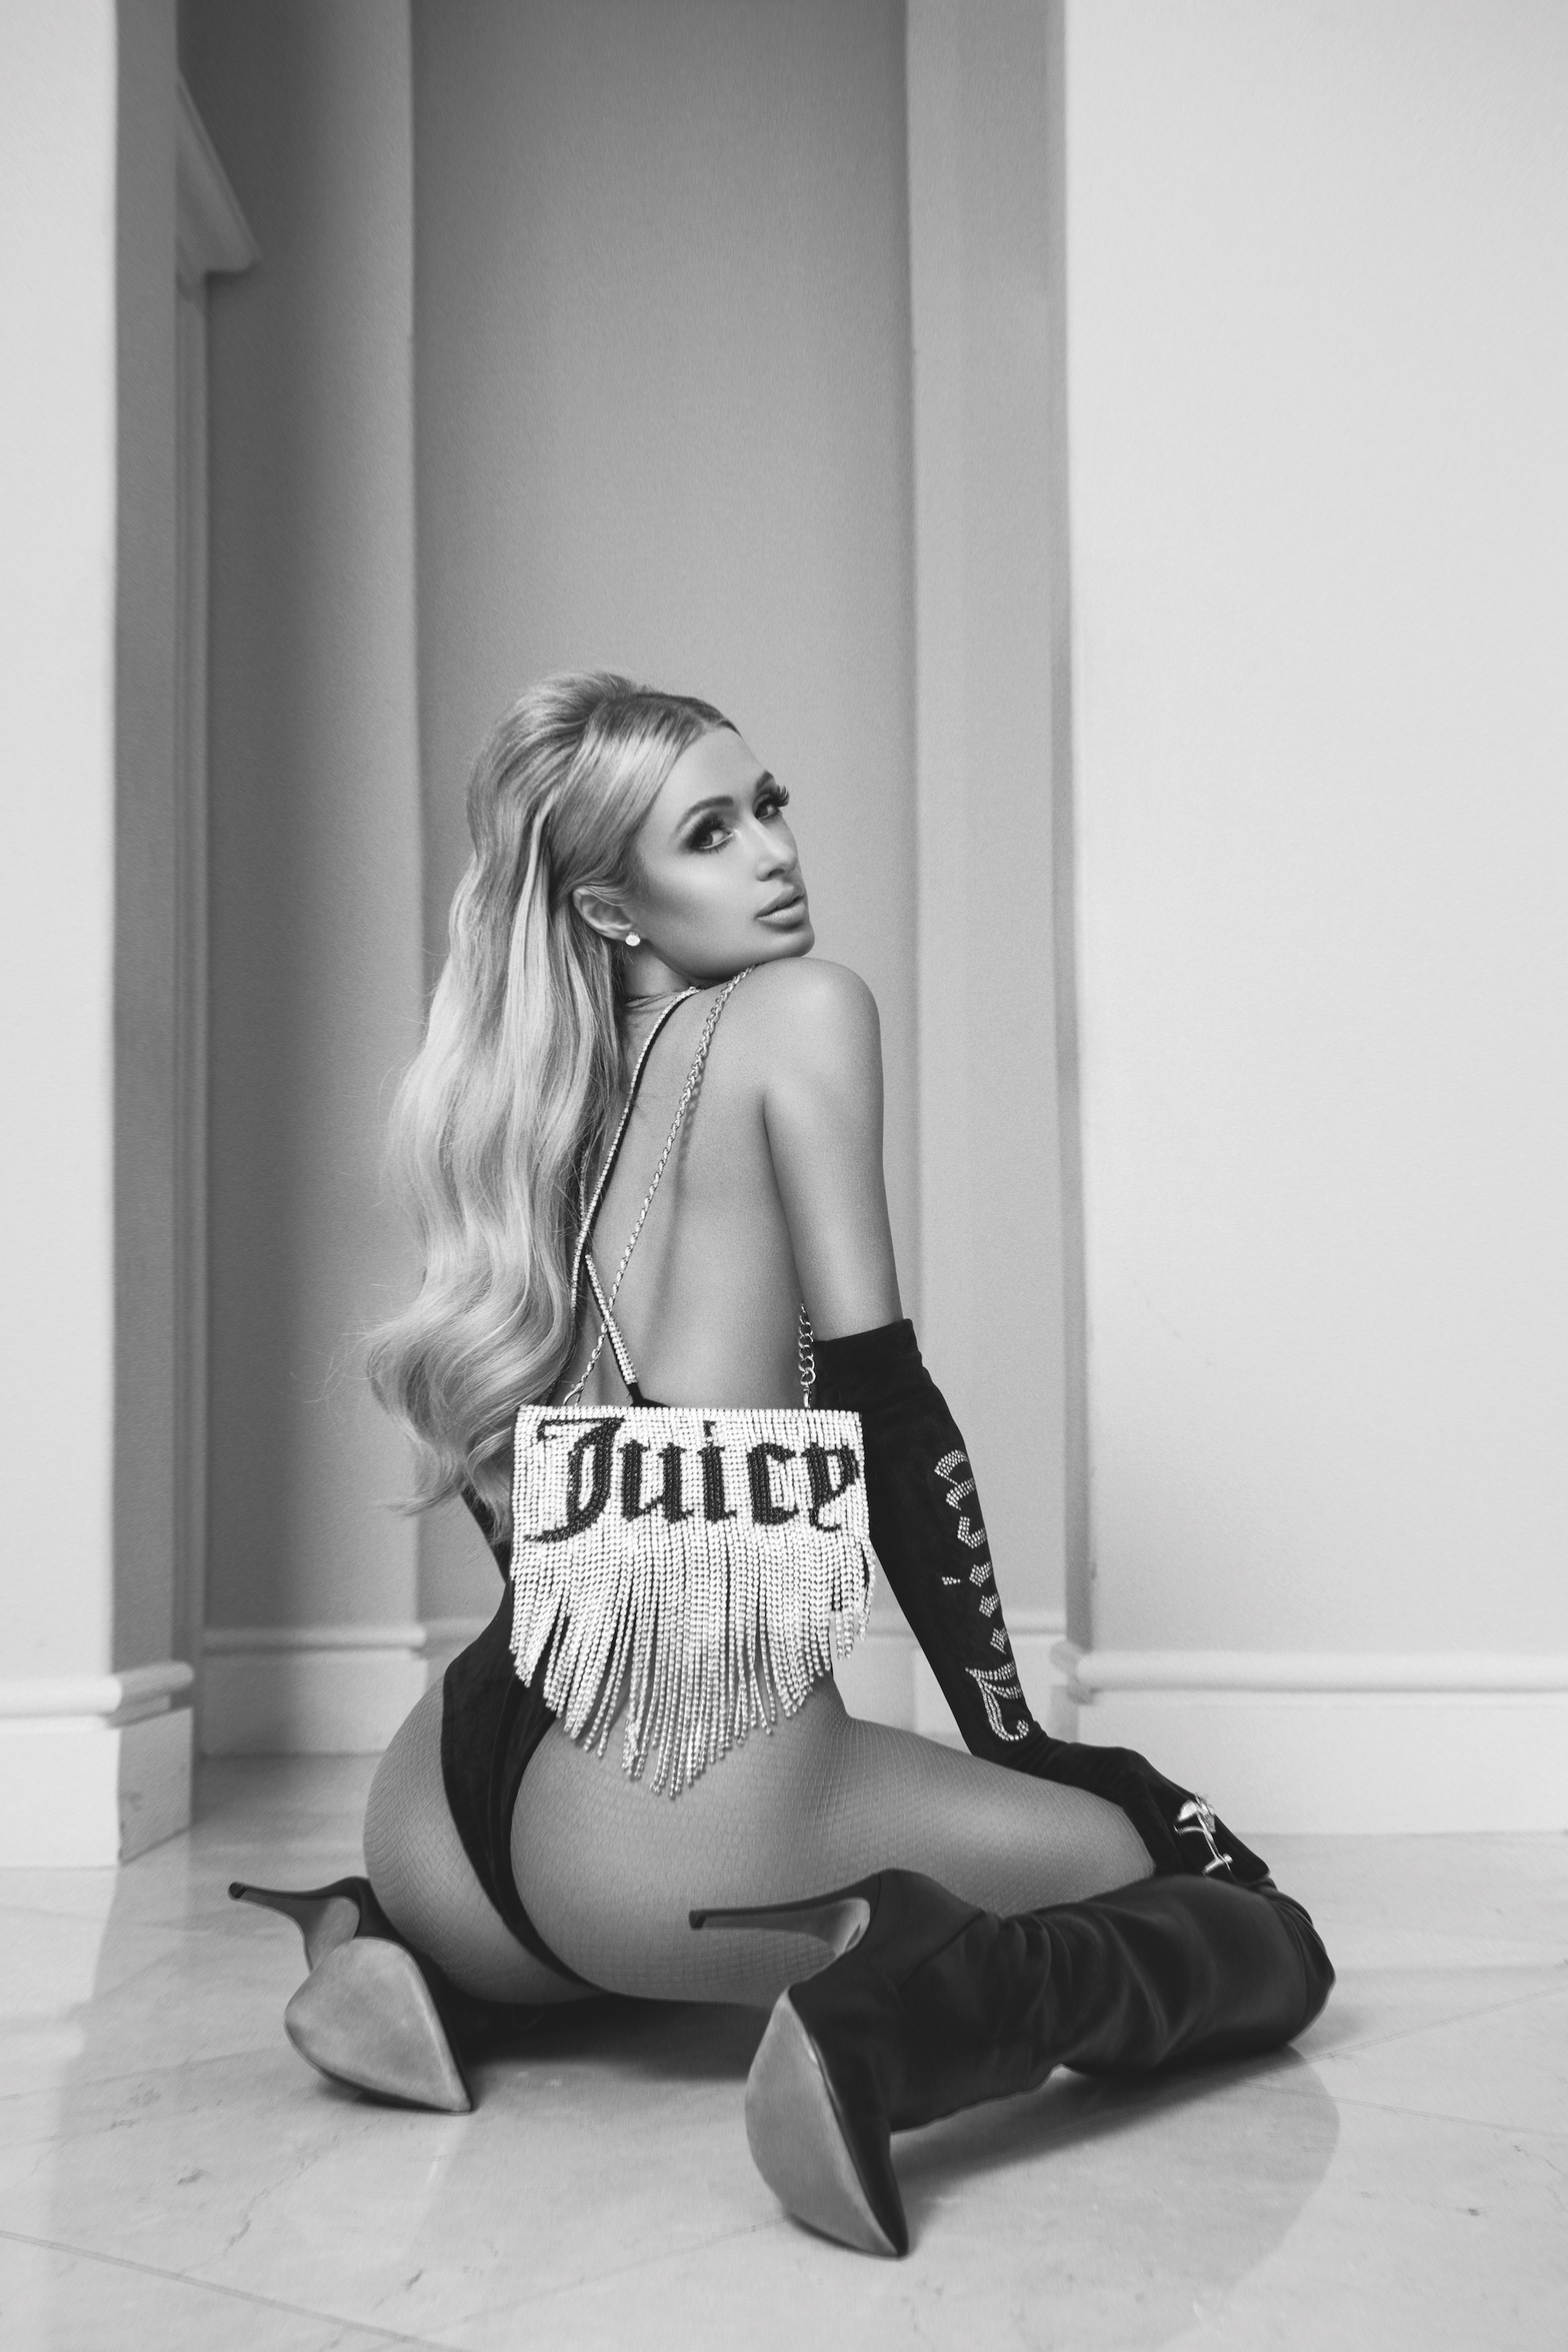 Fotos n°1 : Paris Hilton Reozing Sex Appeal en New Shoot!